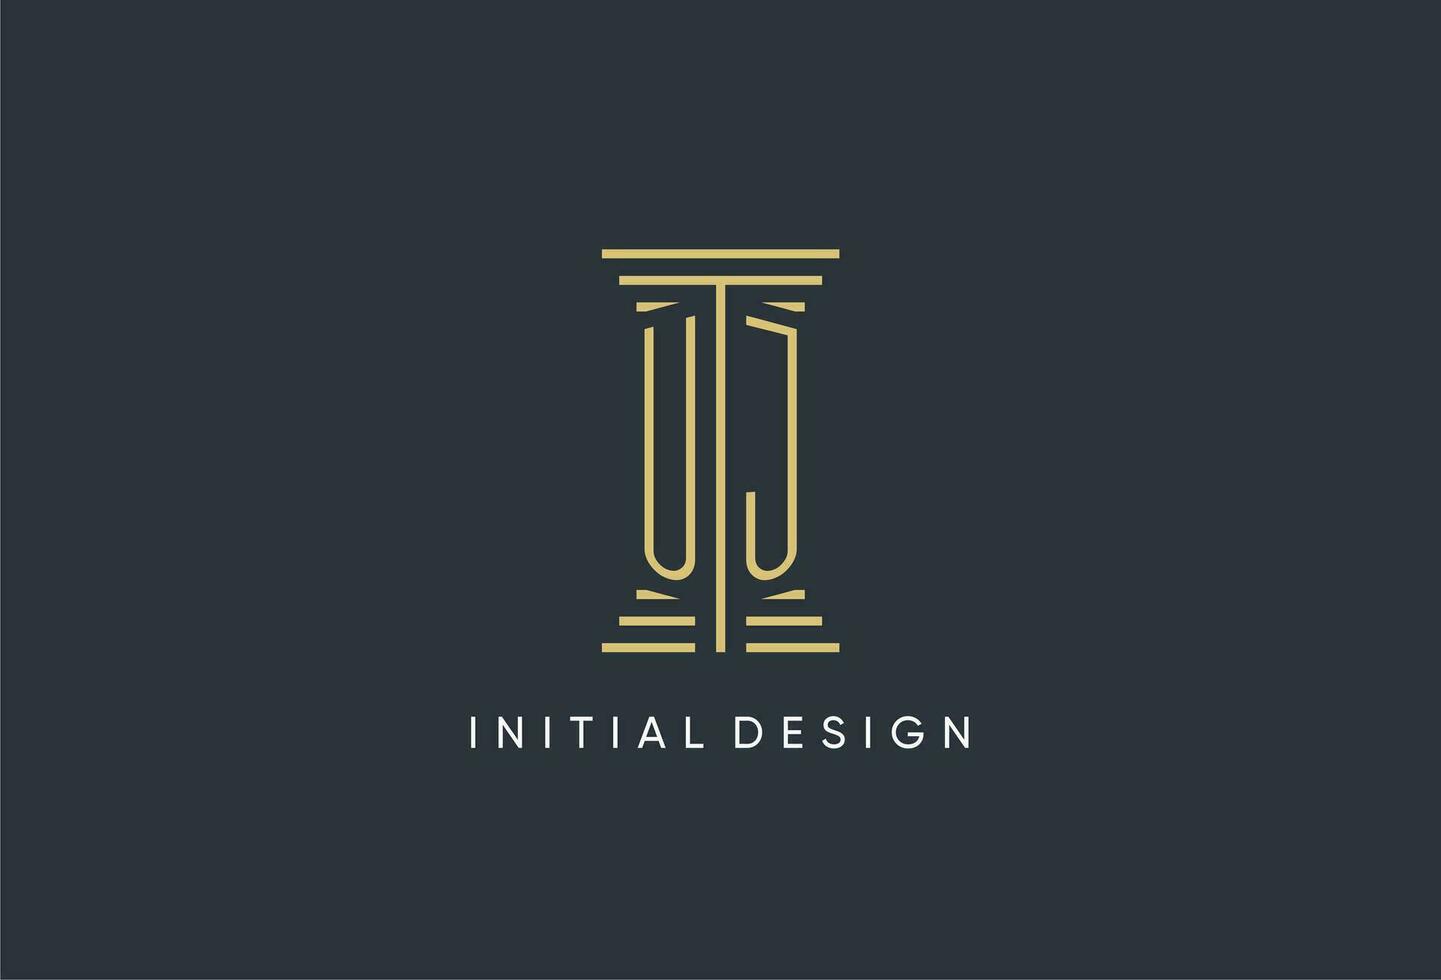 UJ initial monogram with pillar shape logo design vector